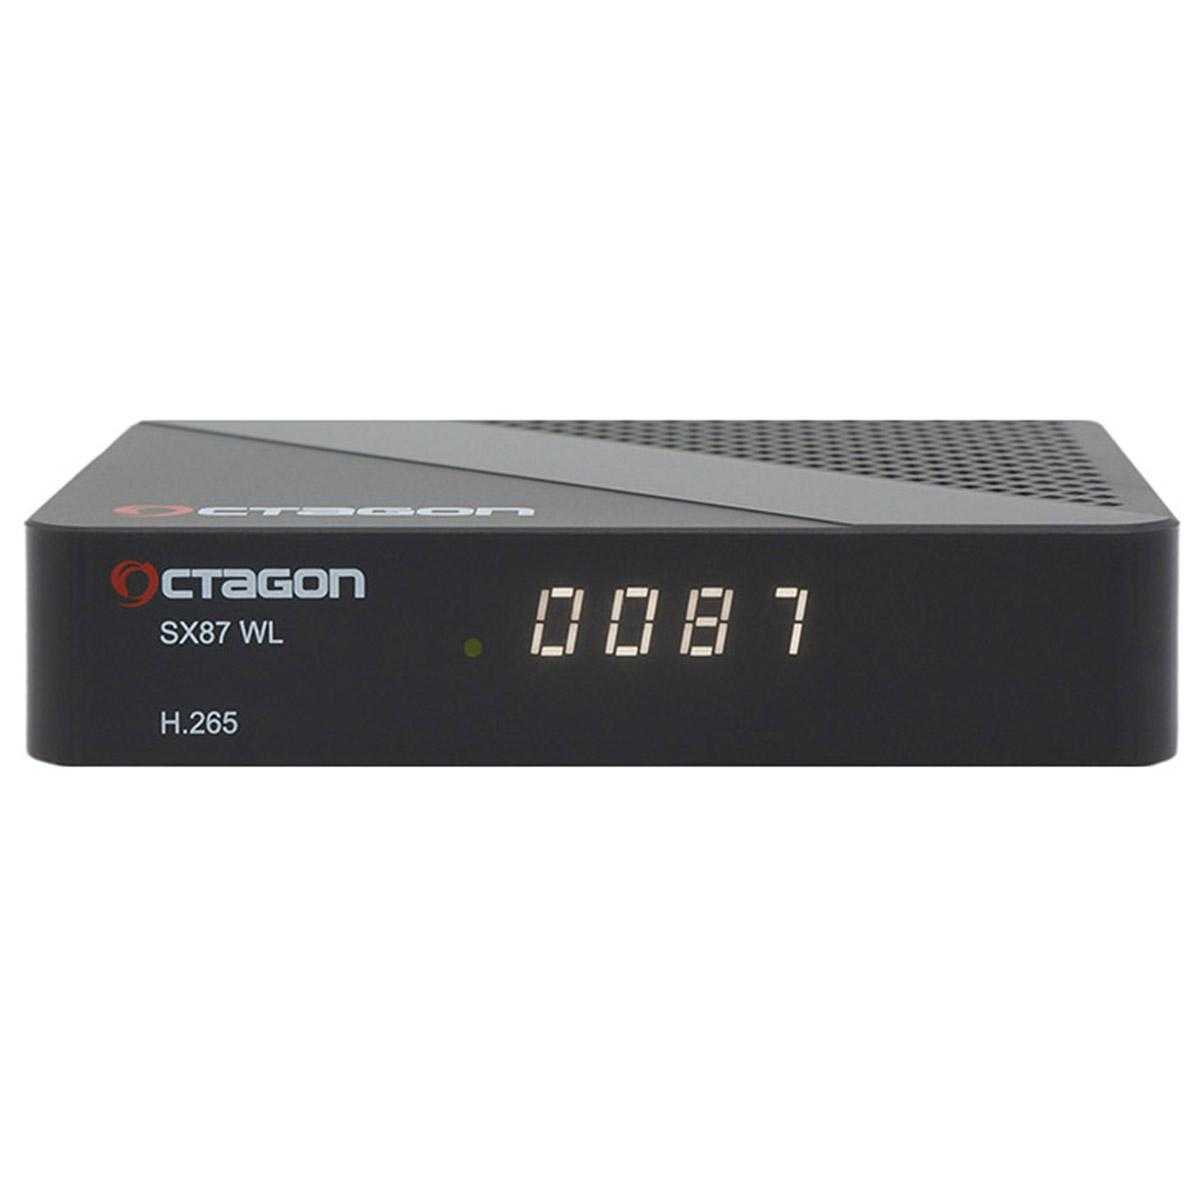 OCTAGON SX87 WL HD H.265 DVB-S2 IP Receiver TOP PREIS TOP AUSSTATTUNG !!!